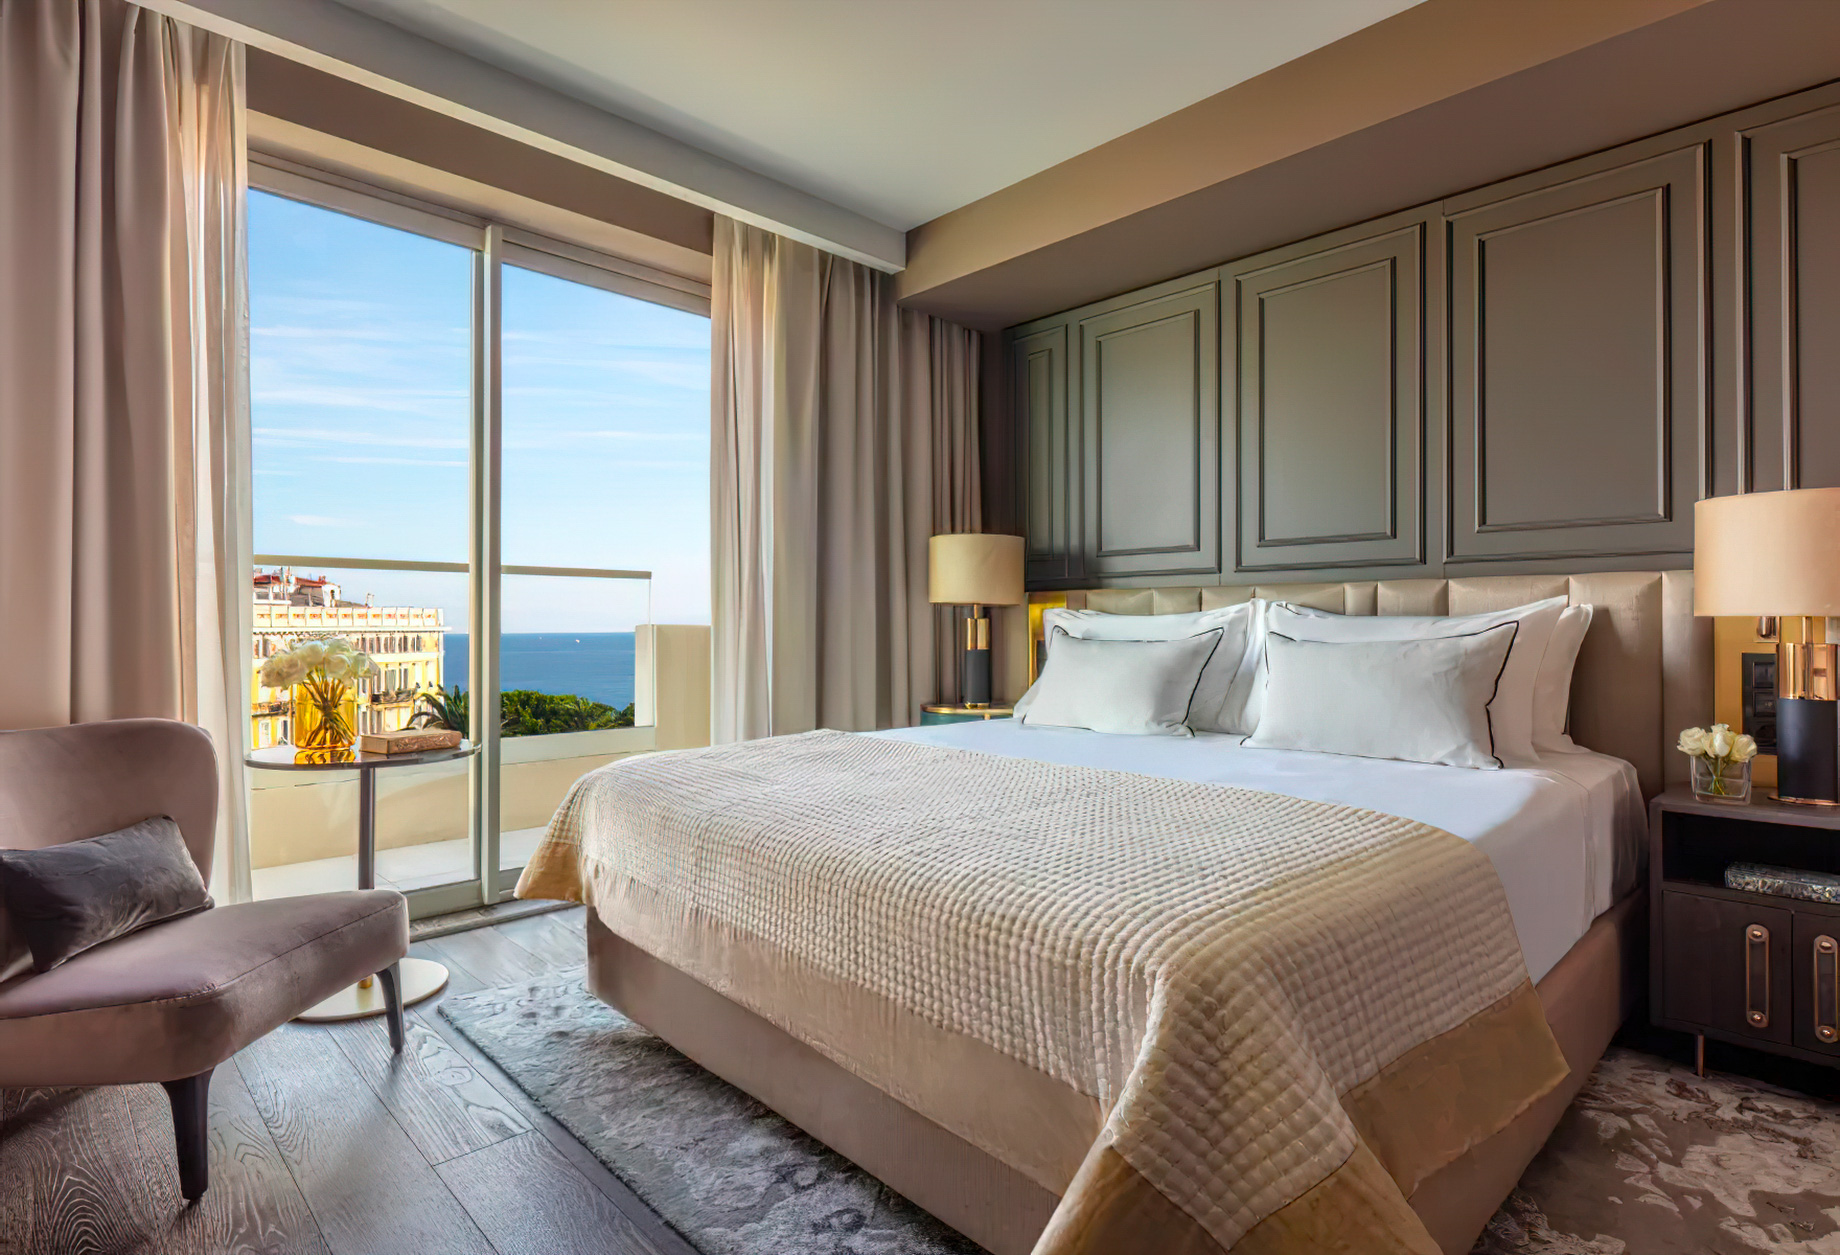 Anantara Plaza Nice Hotel – Nice, France – Deluxe Garden and Sea View Room